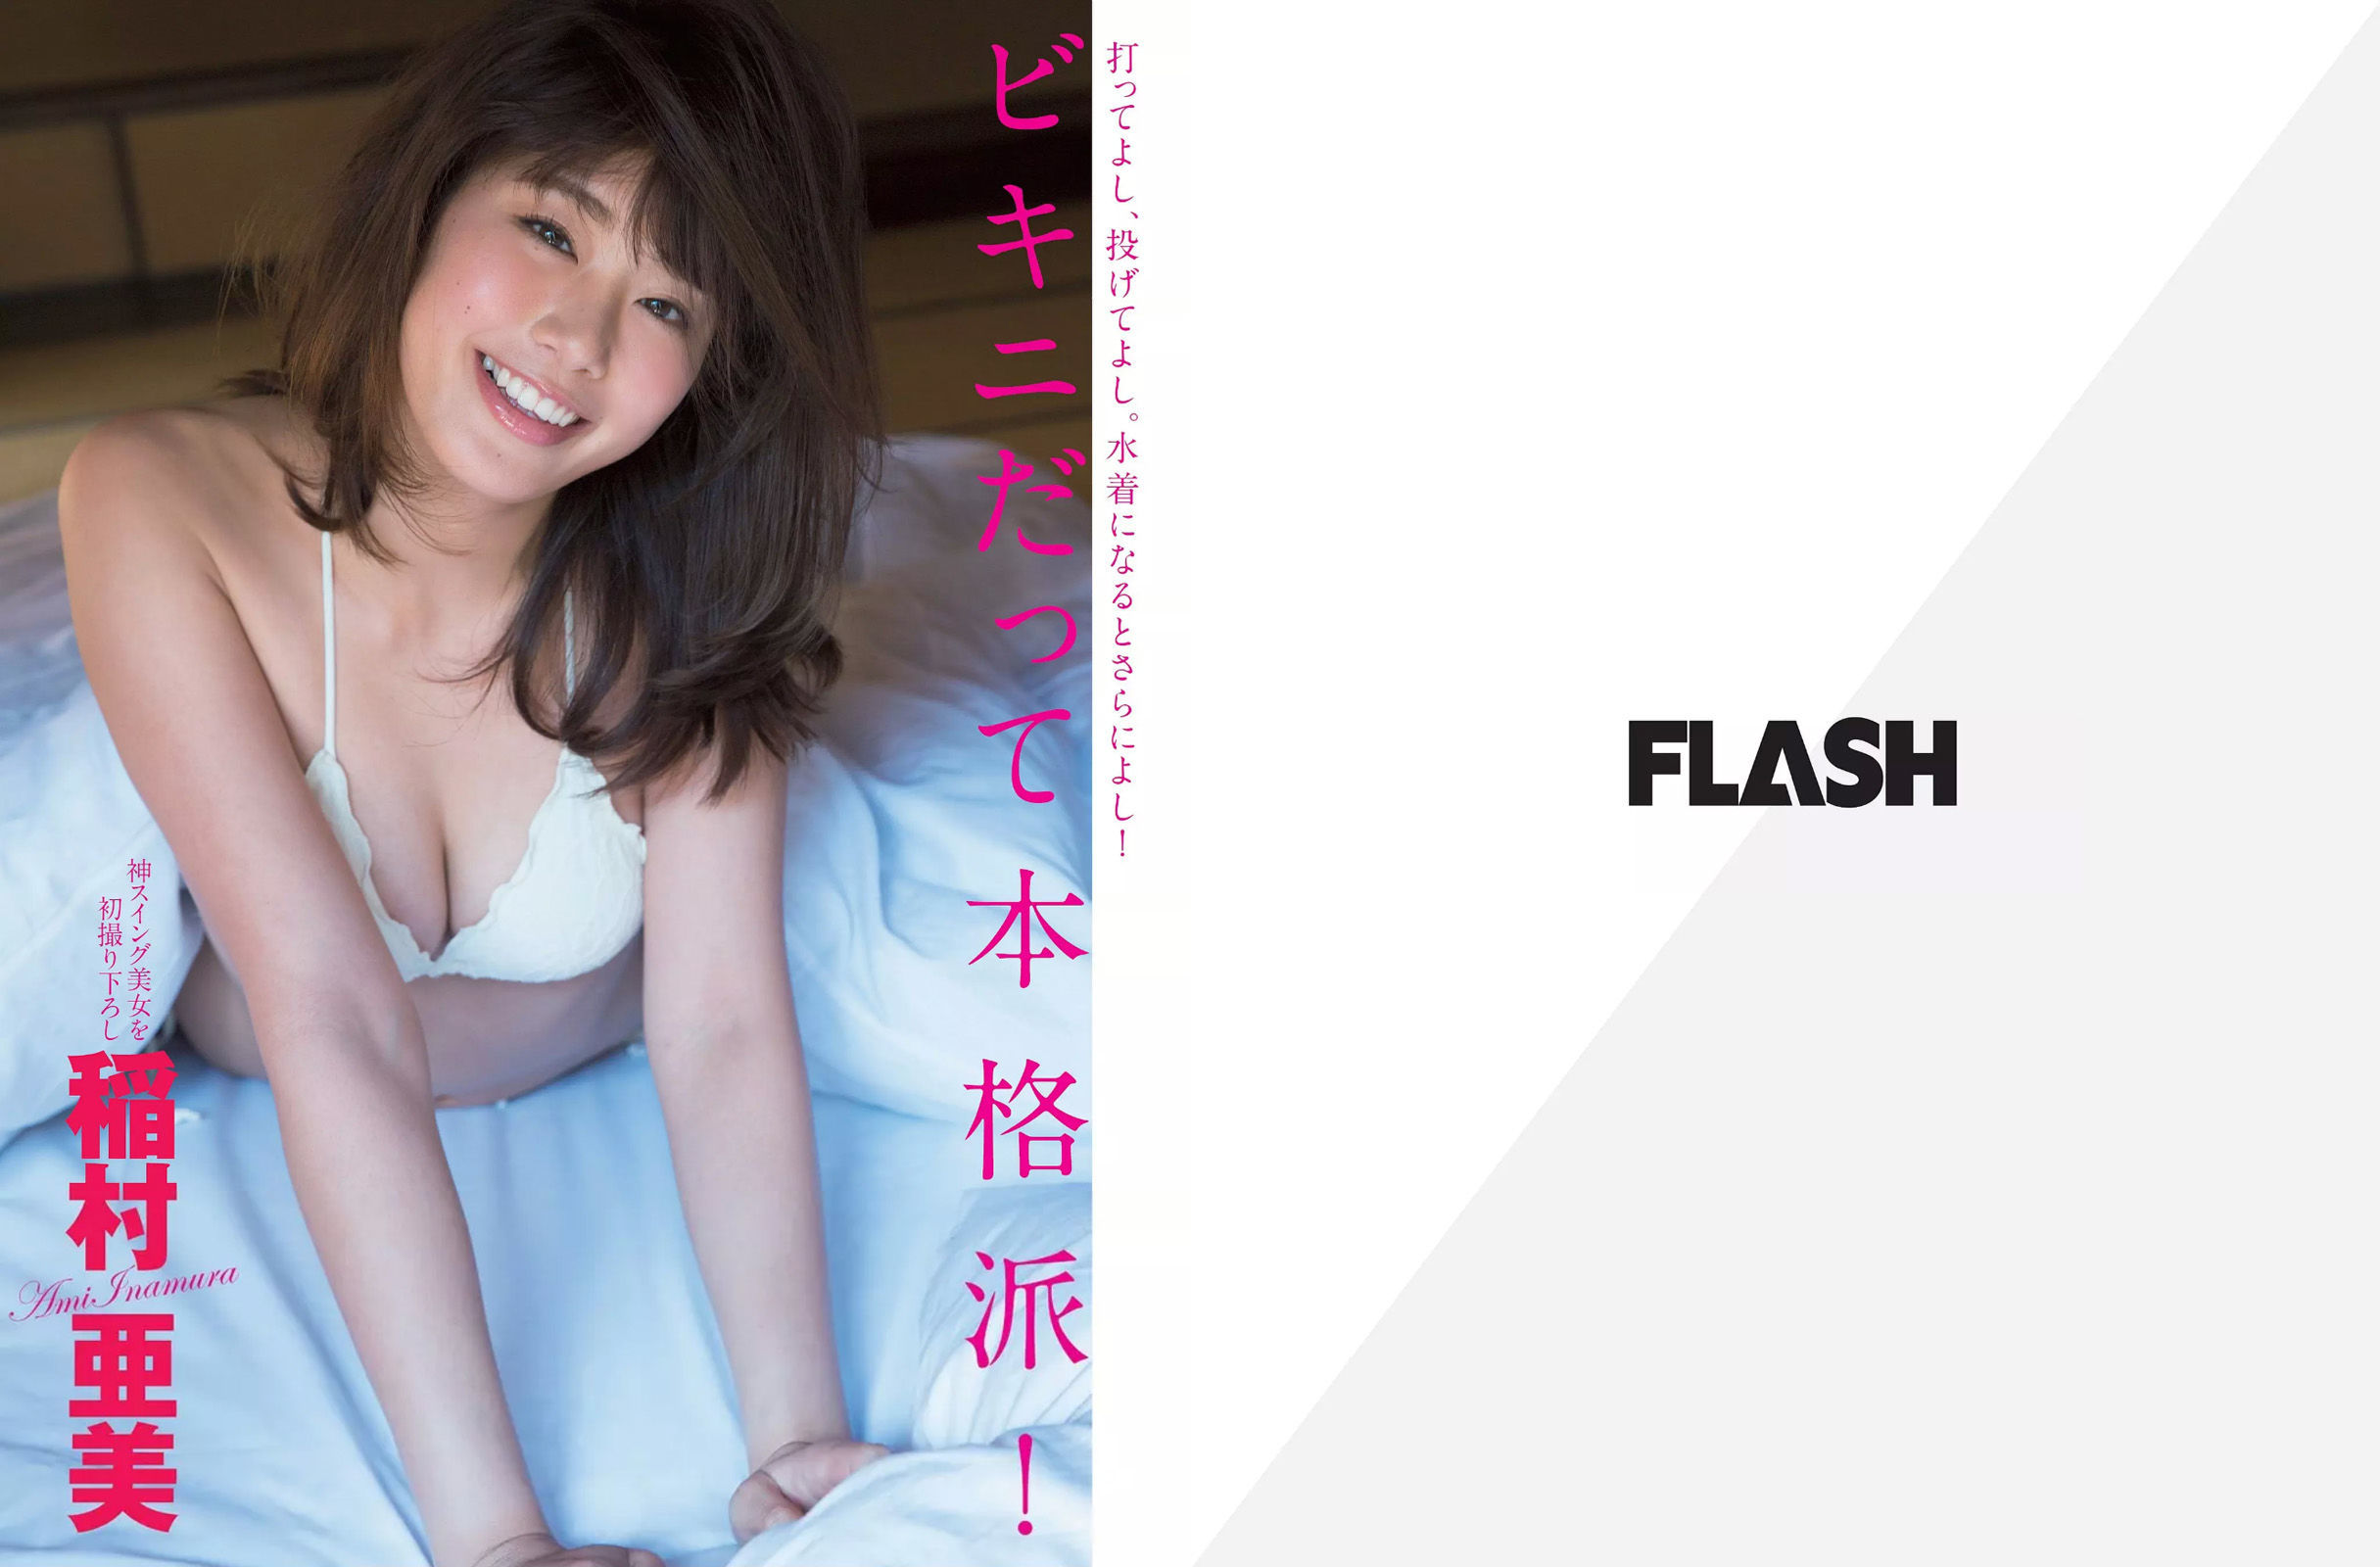 [FLASH]杂志:稻村亚美高品质写真作品个人分享(21P)